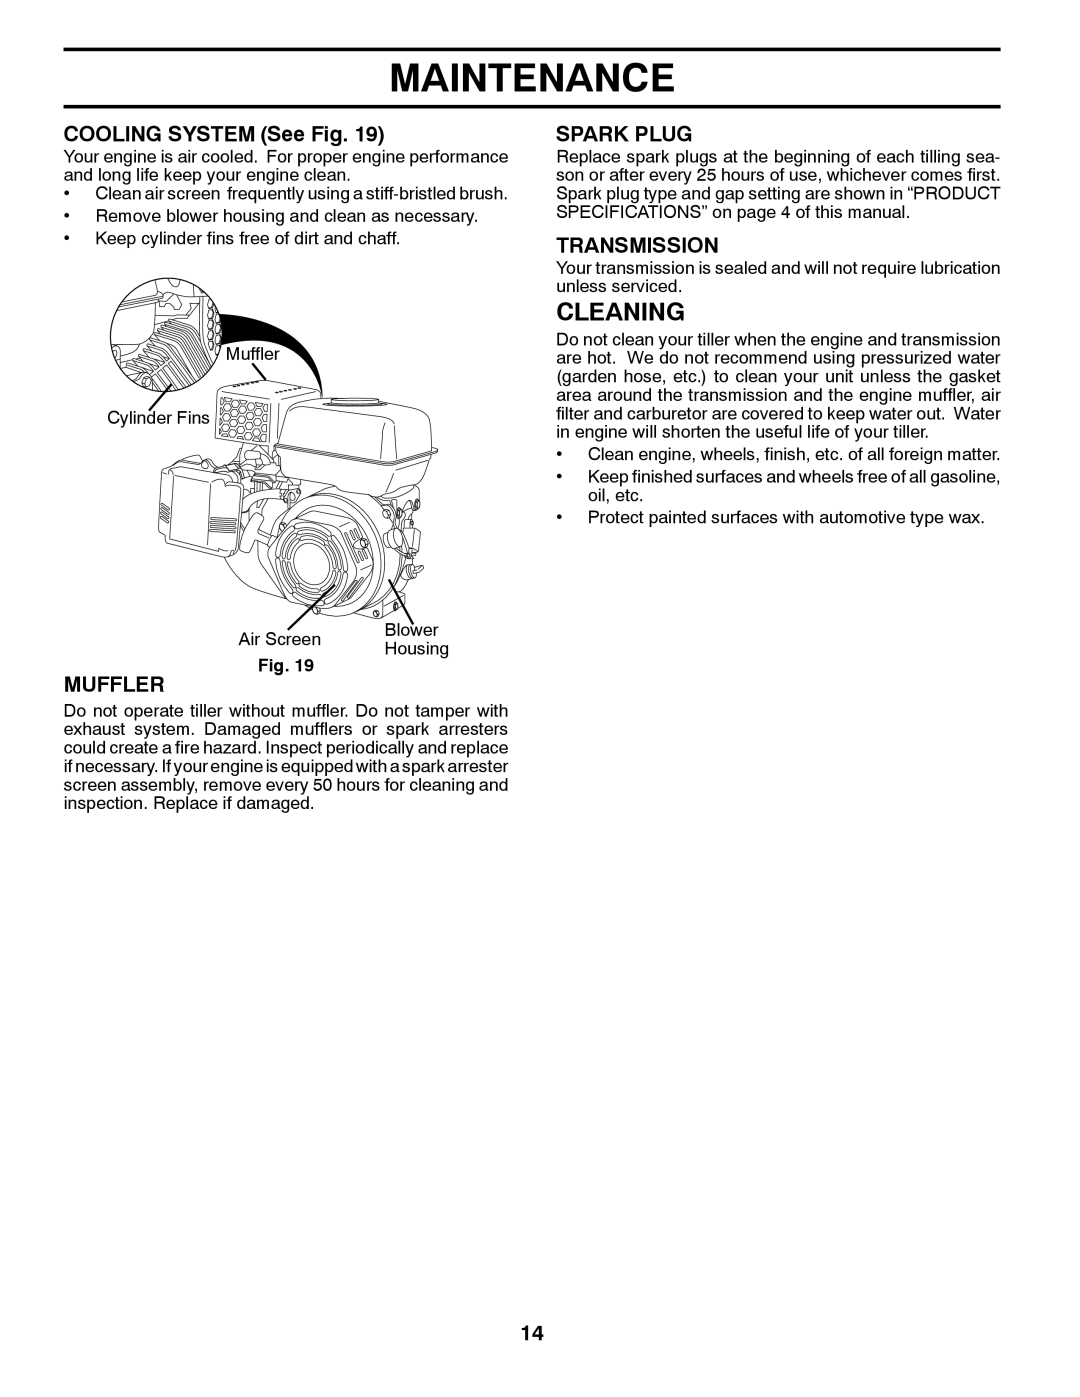 Poulan PRRT900 manual Cleaning, COOLING SYSTEM See Fig, Muffler, Spark Plug, Transmission, Maintenance 